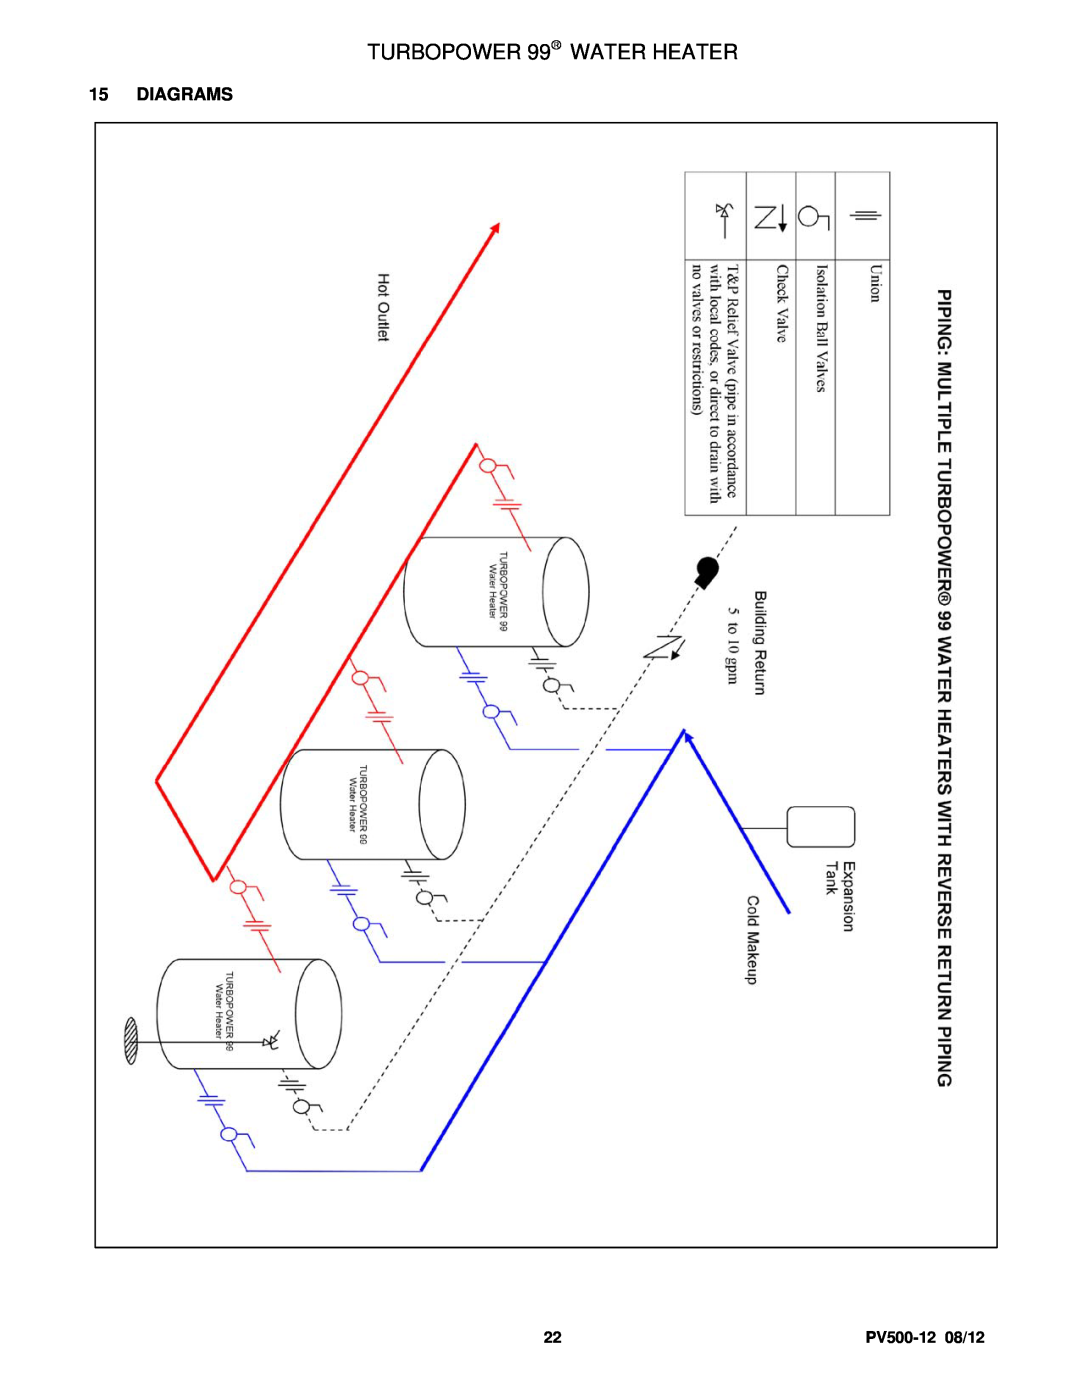 PVI Industries PV500-12 manual TURBOPOWER 99 WATER HEATER, Diagrams 